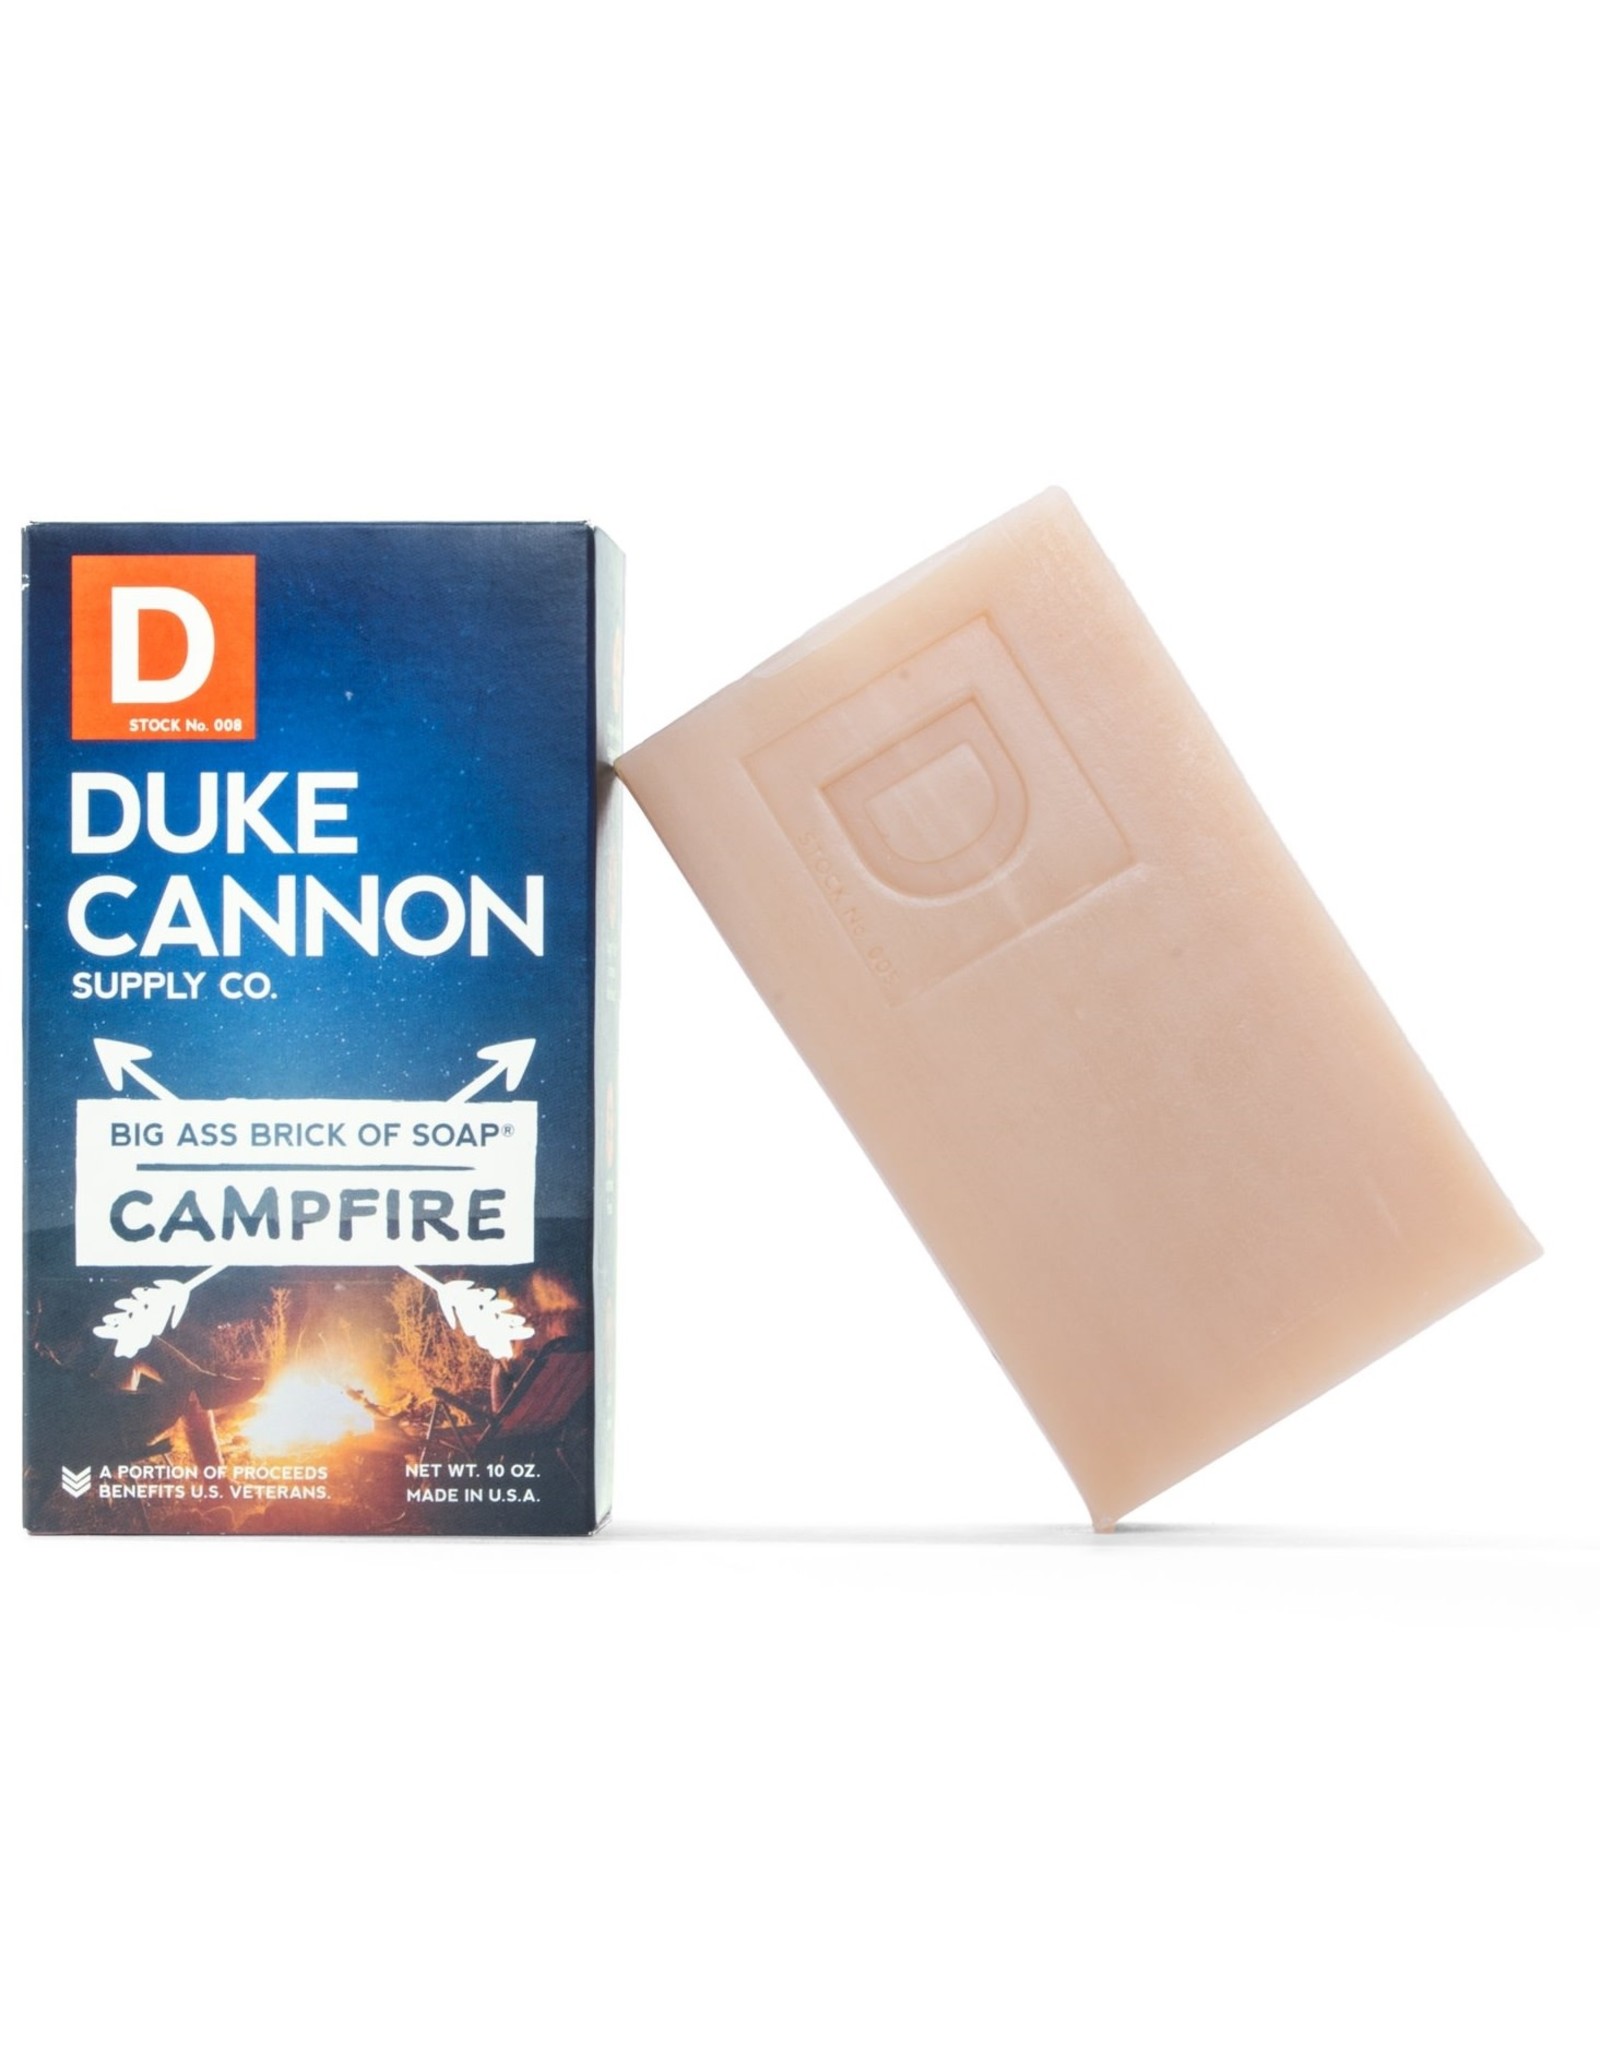 Duke Cannon Supply Co. Campfire Big Ass Brick of Soap